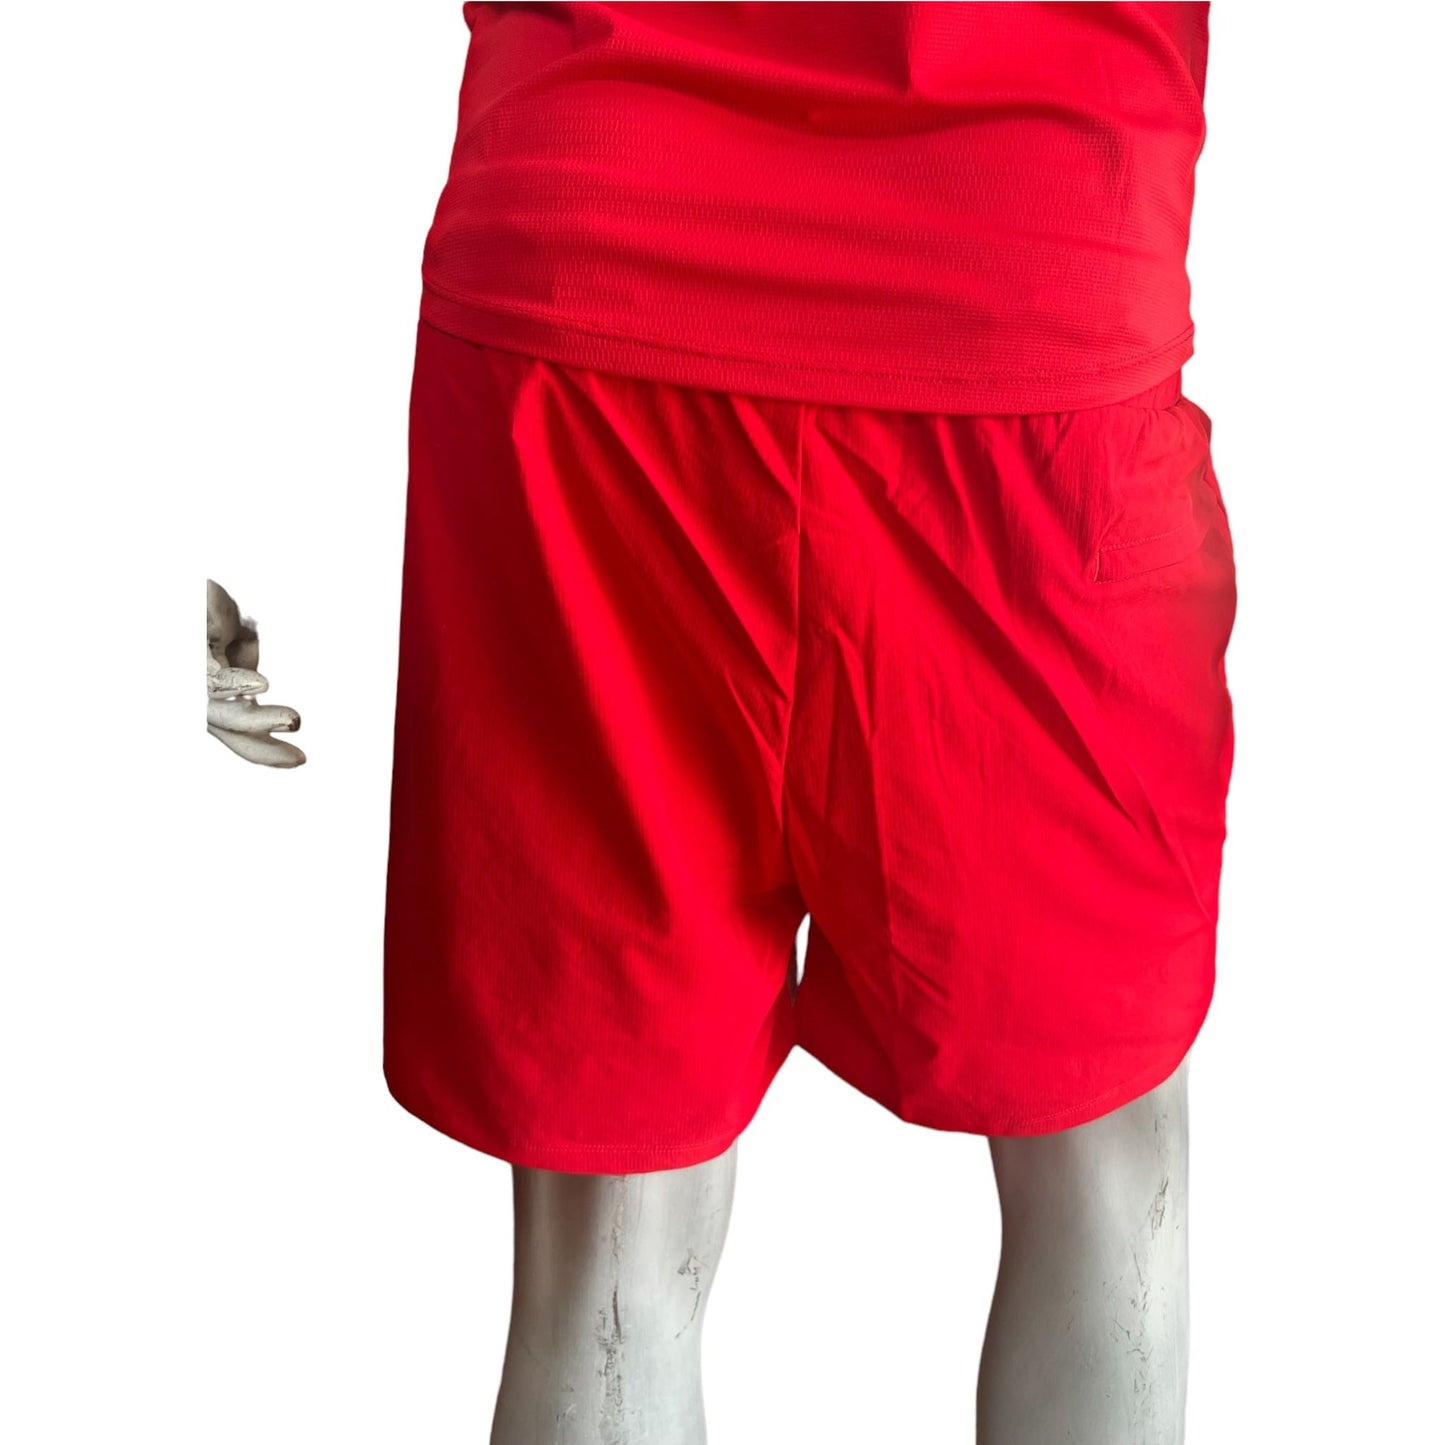 Surge Shorts : Red